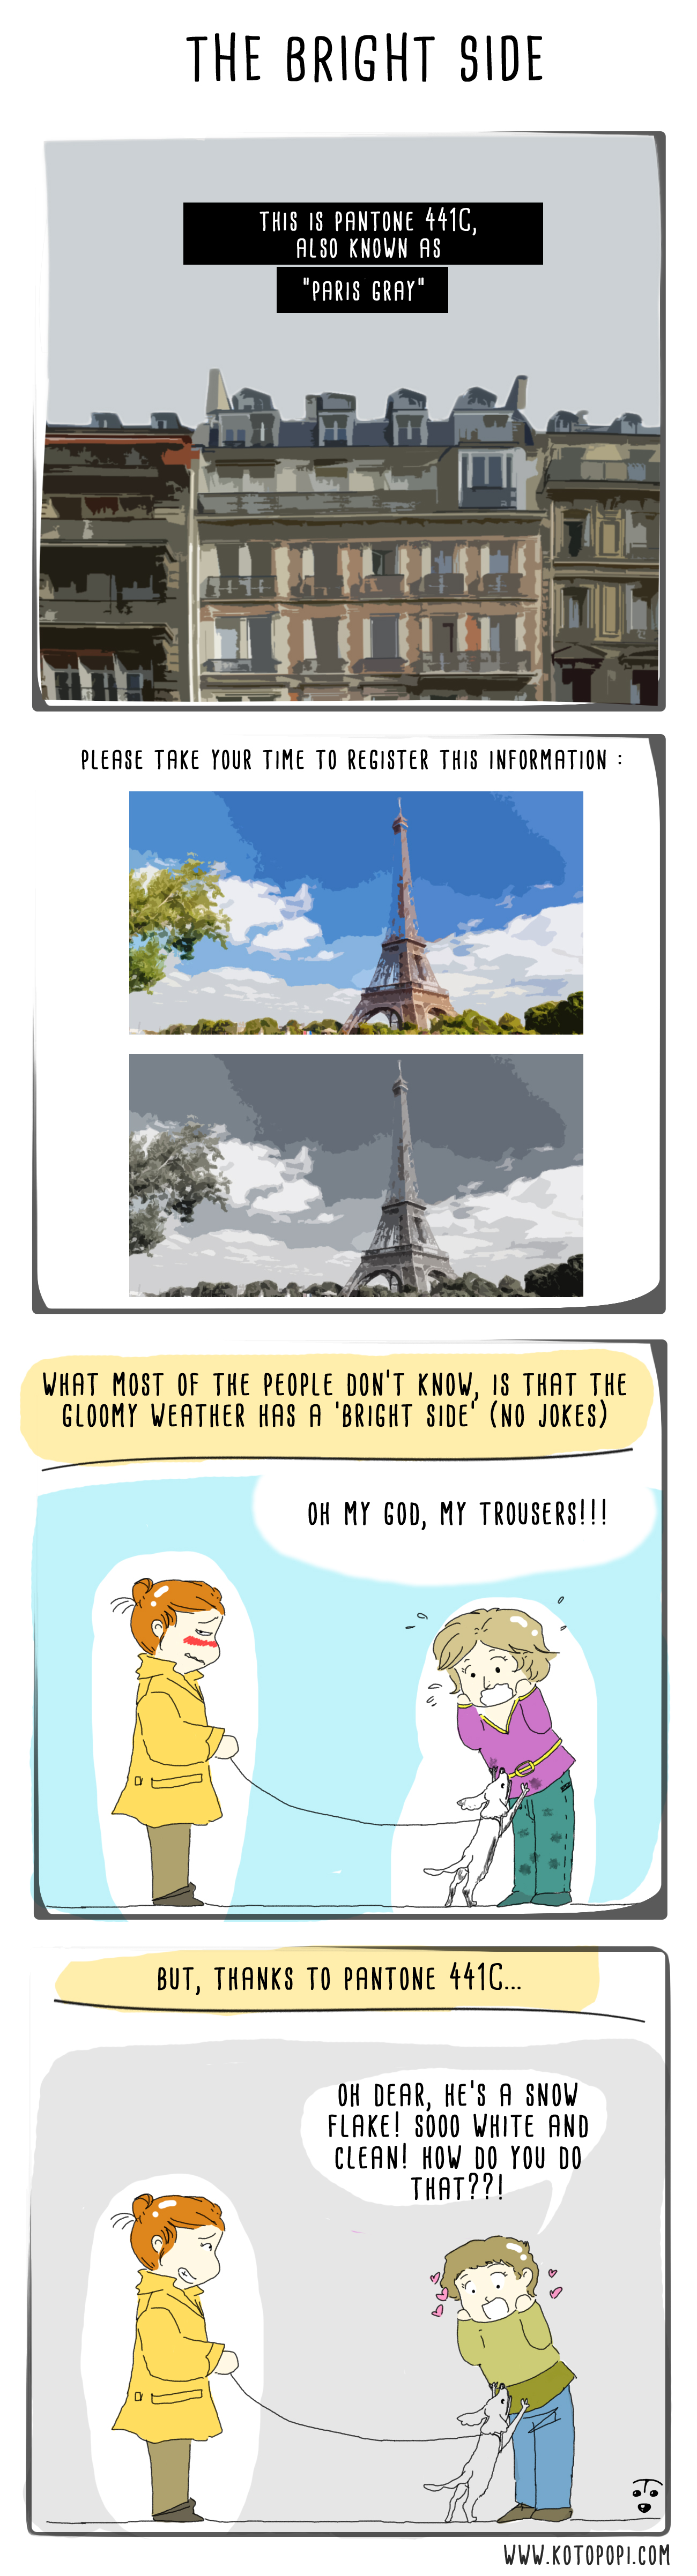 a webcomic about a city with no sun